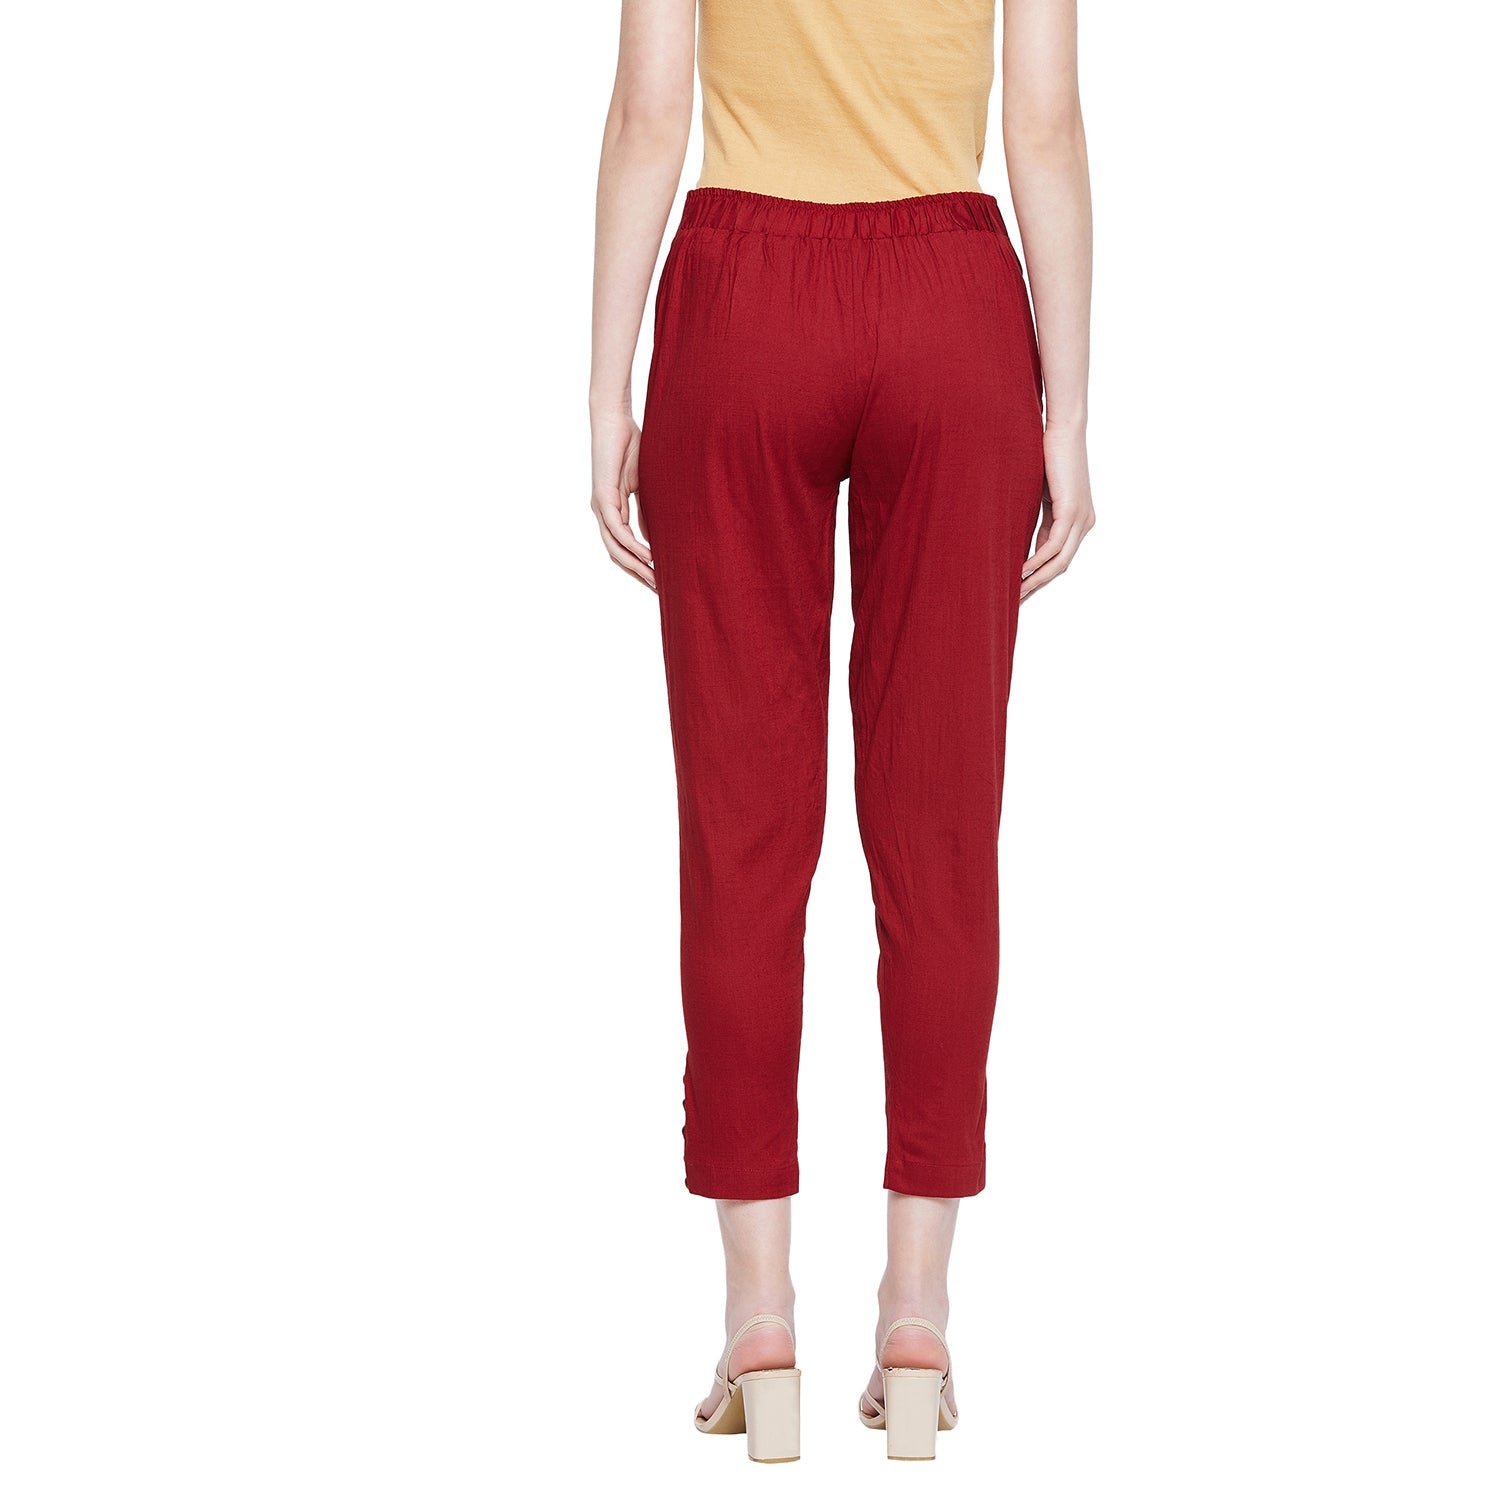 SARA Premium Women Track pants | navy lycra pant | fullpant for women |  navy pants for women |Original lycra pants |Stylish | Cotton Blend pyjama 